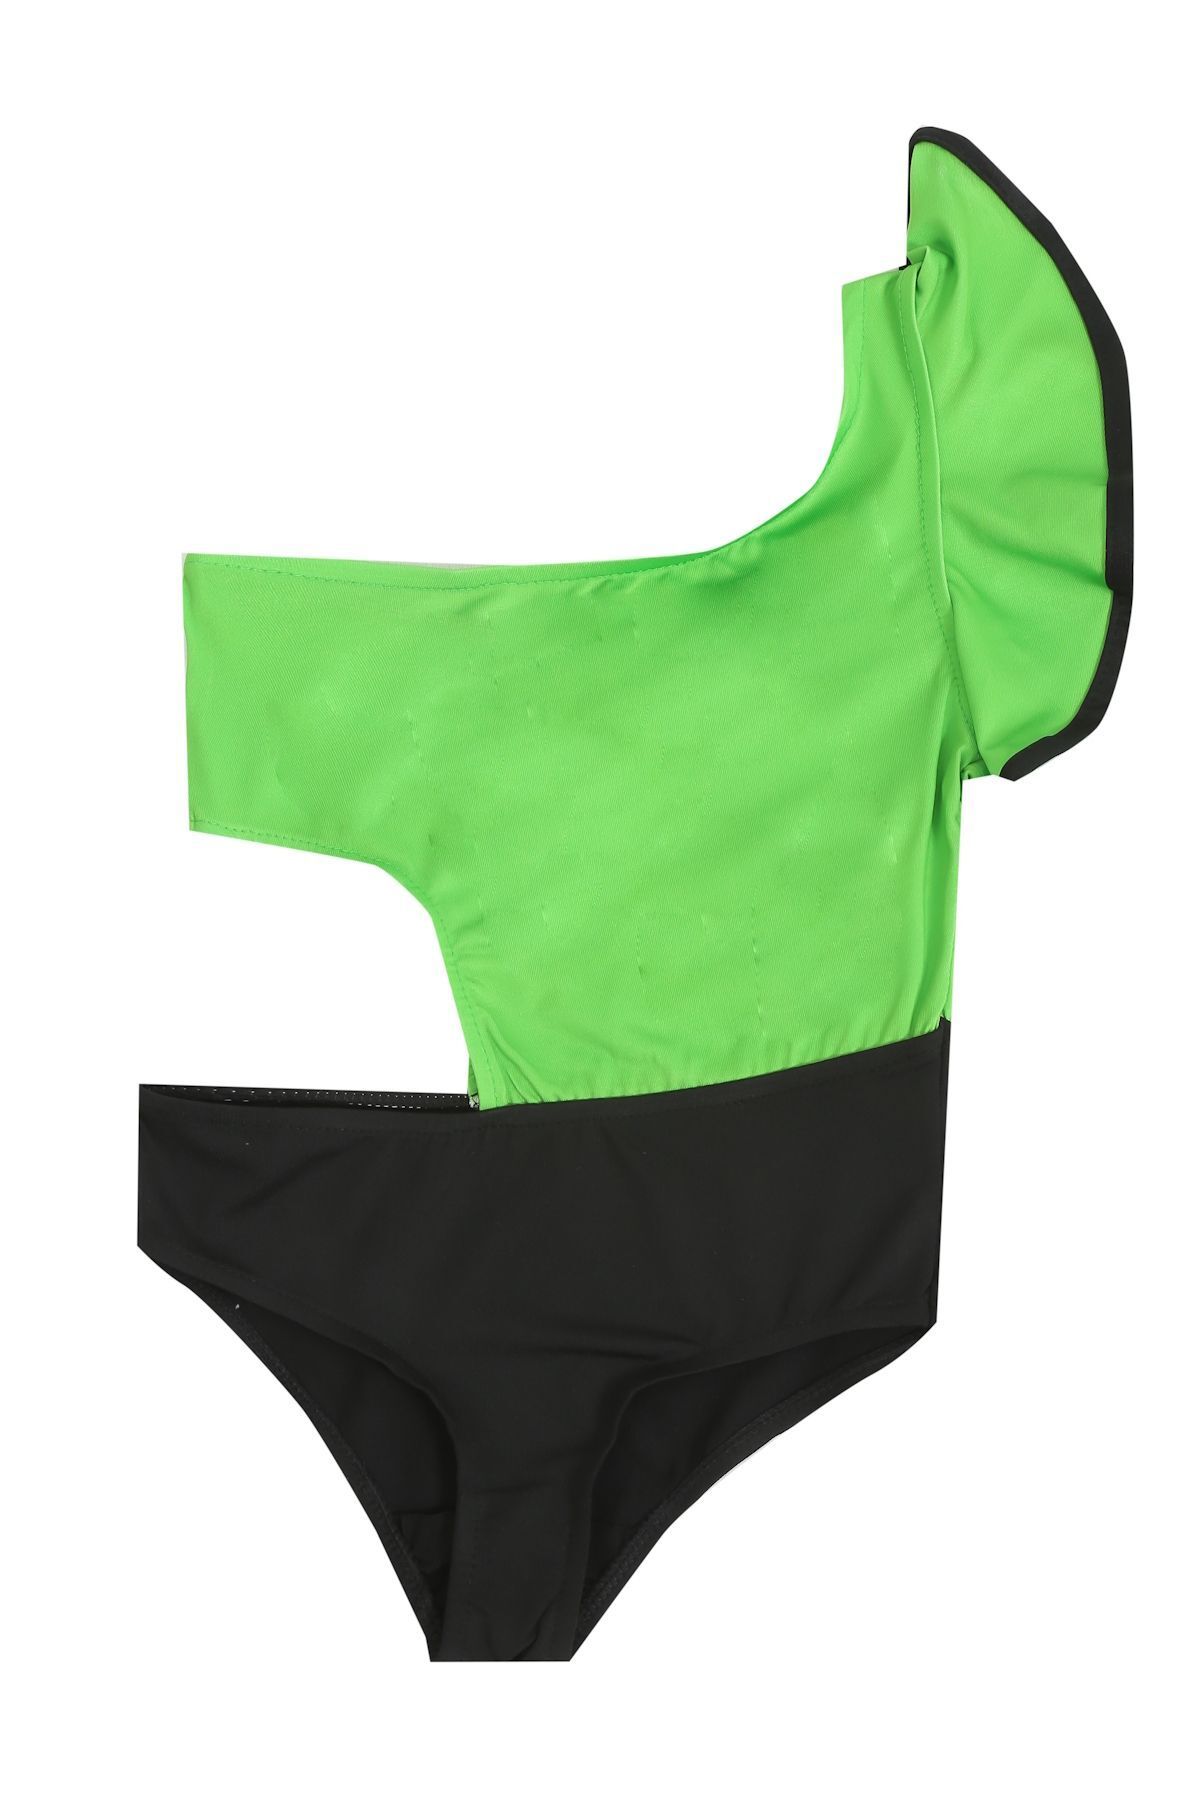 Papiş Kız Çocuk Mayo Yeşil Siyah Renkli Fırfır Kollu Bikini Fırfır Detaylı Kız Çocuk Deniz Havuz Mayosu